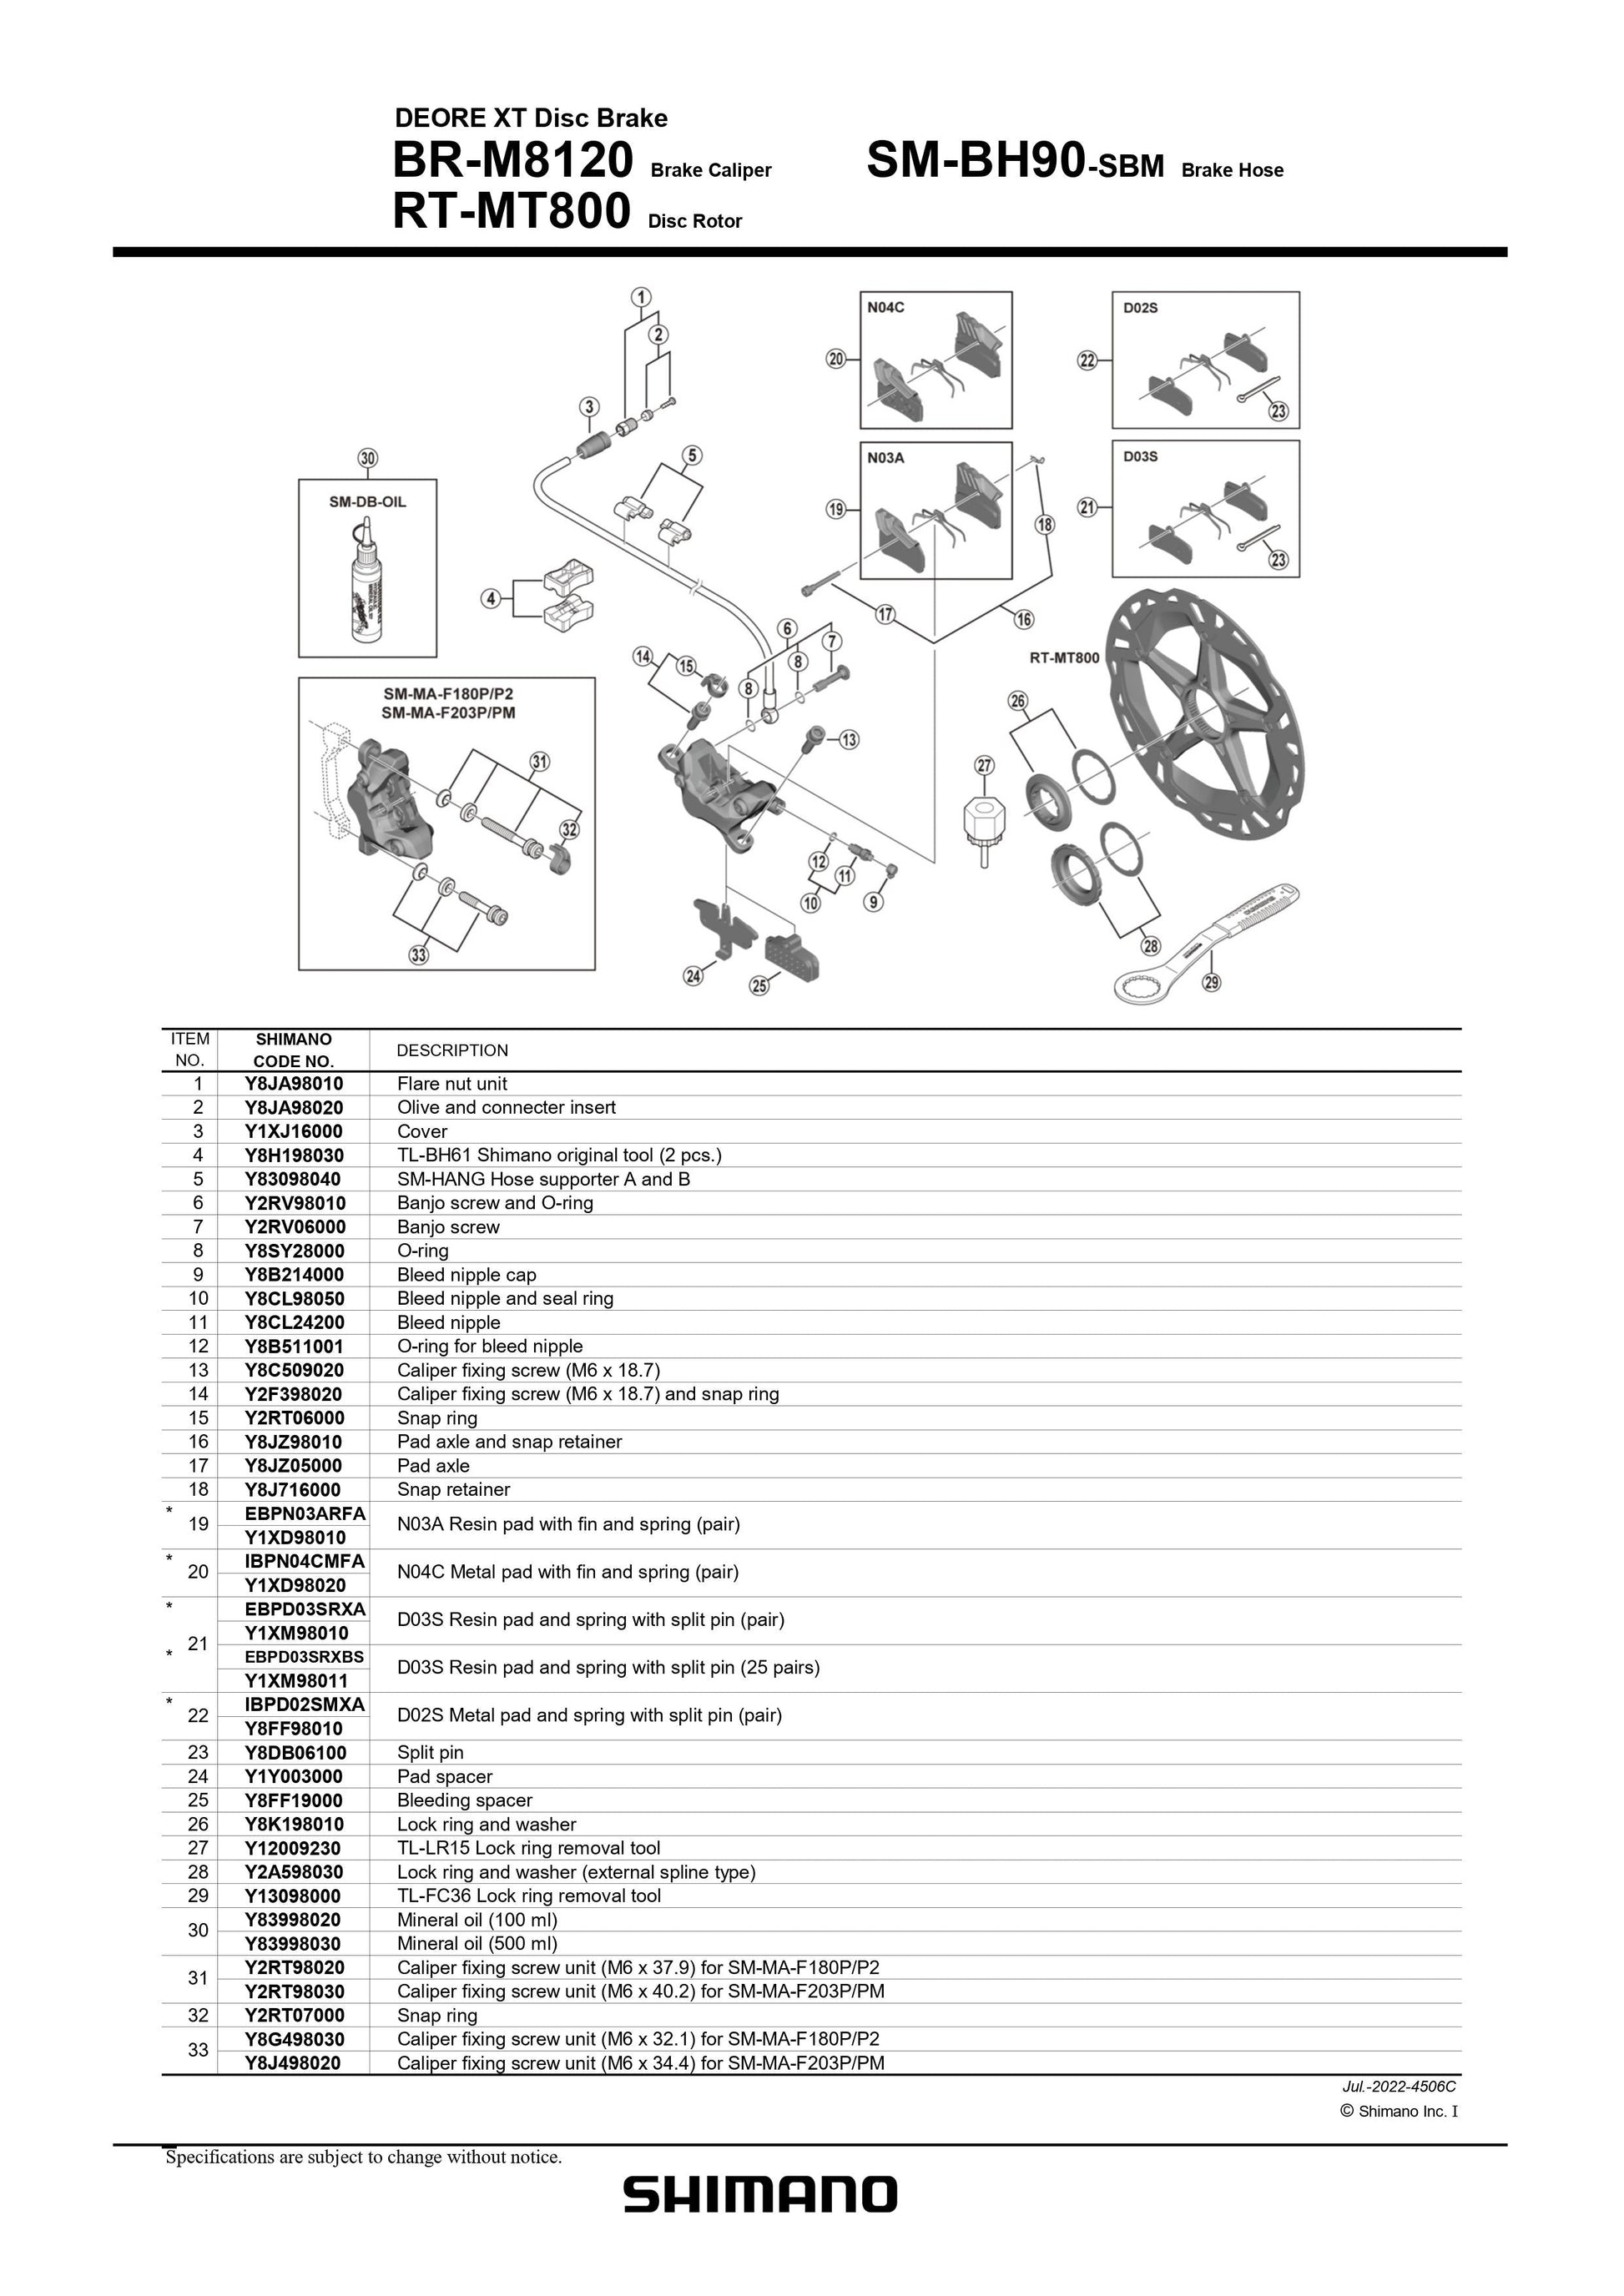 SHIMANO Deore XT BR-M8120 Disc Brake Caliper Banjo Screw and O-ring 4-Piston - Y2RV98010-Pit Crew Cycles